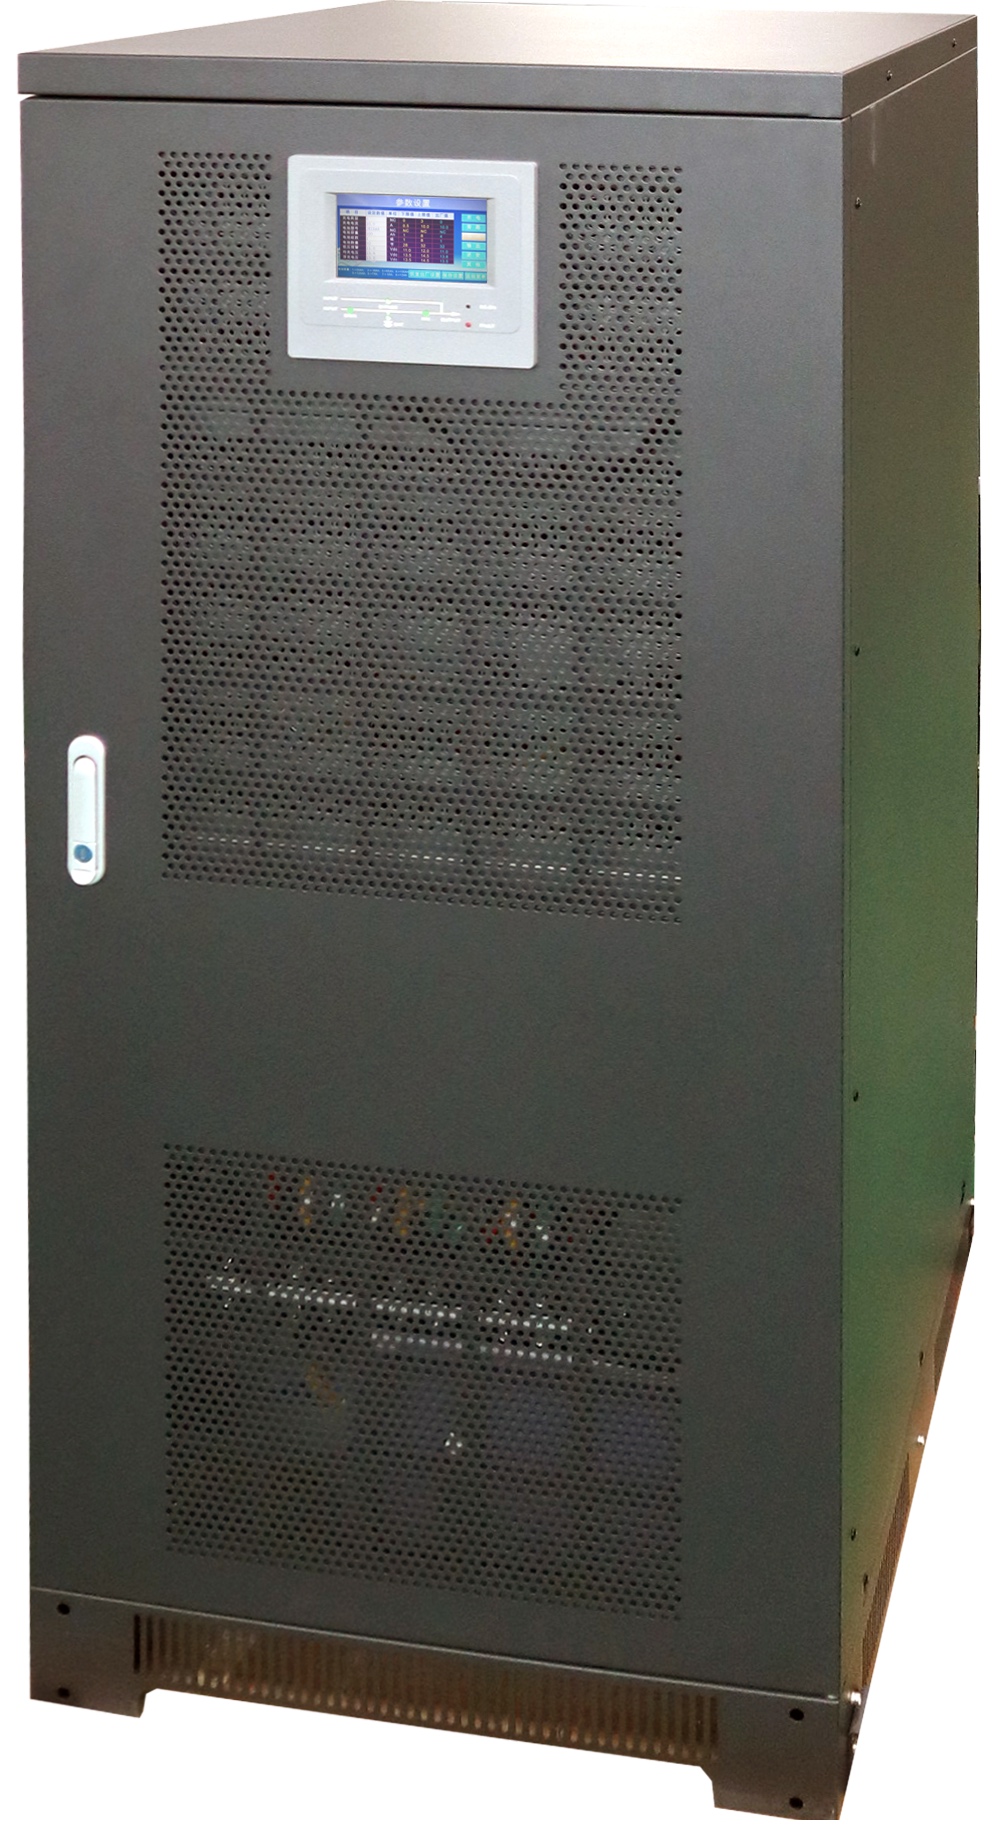 FC Series 80KVA LF Online Transformer Based 3/3 Phase UPS